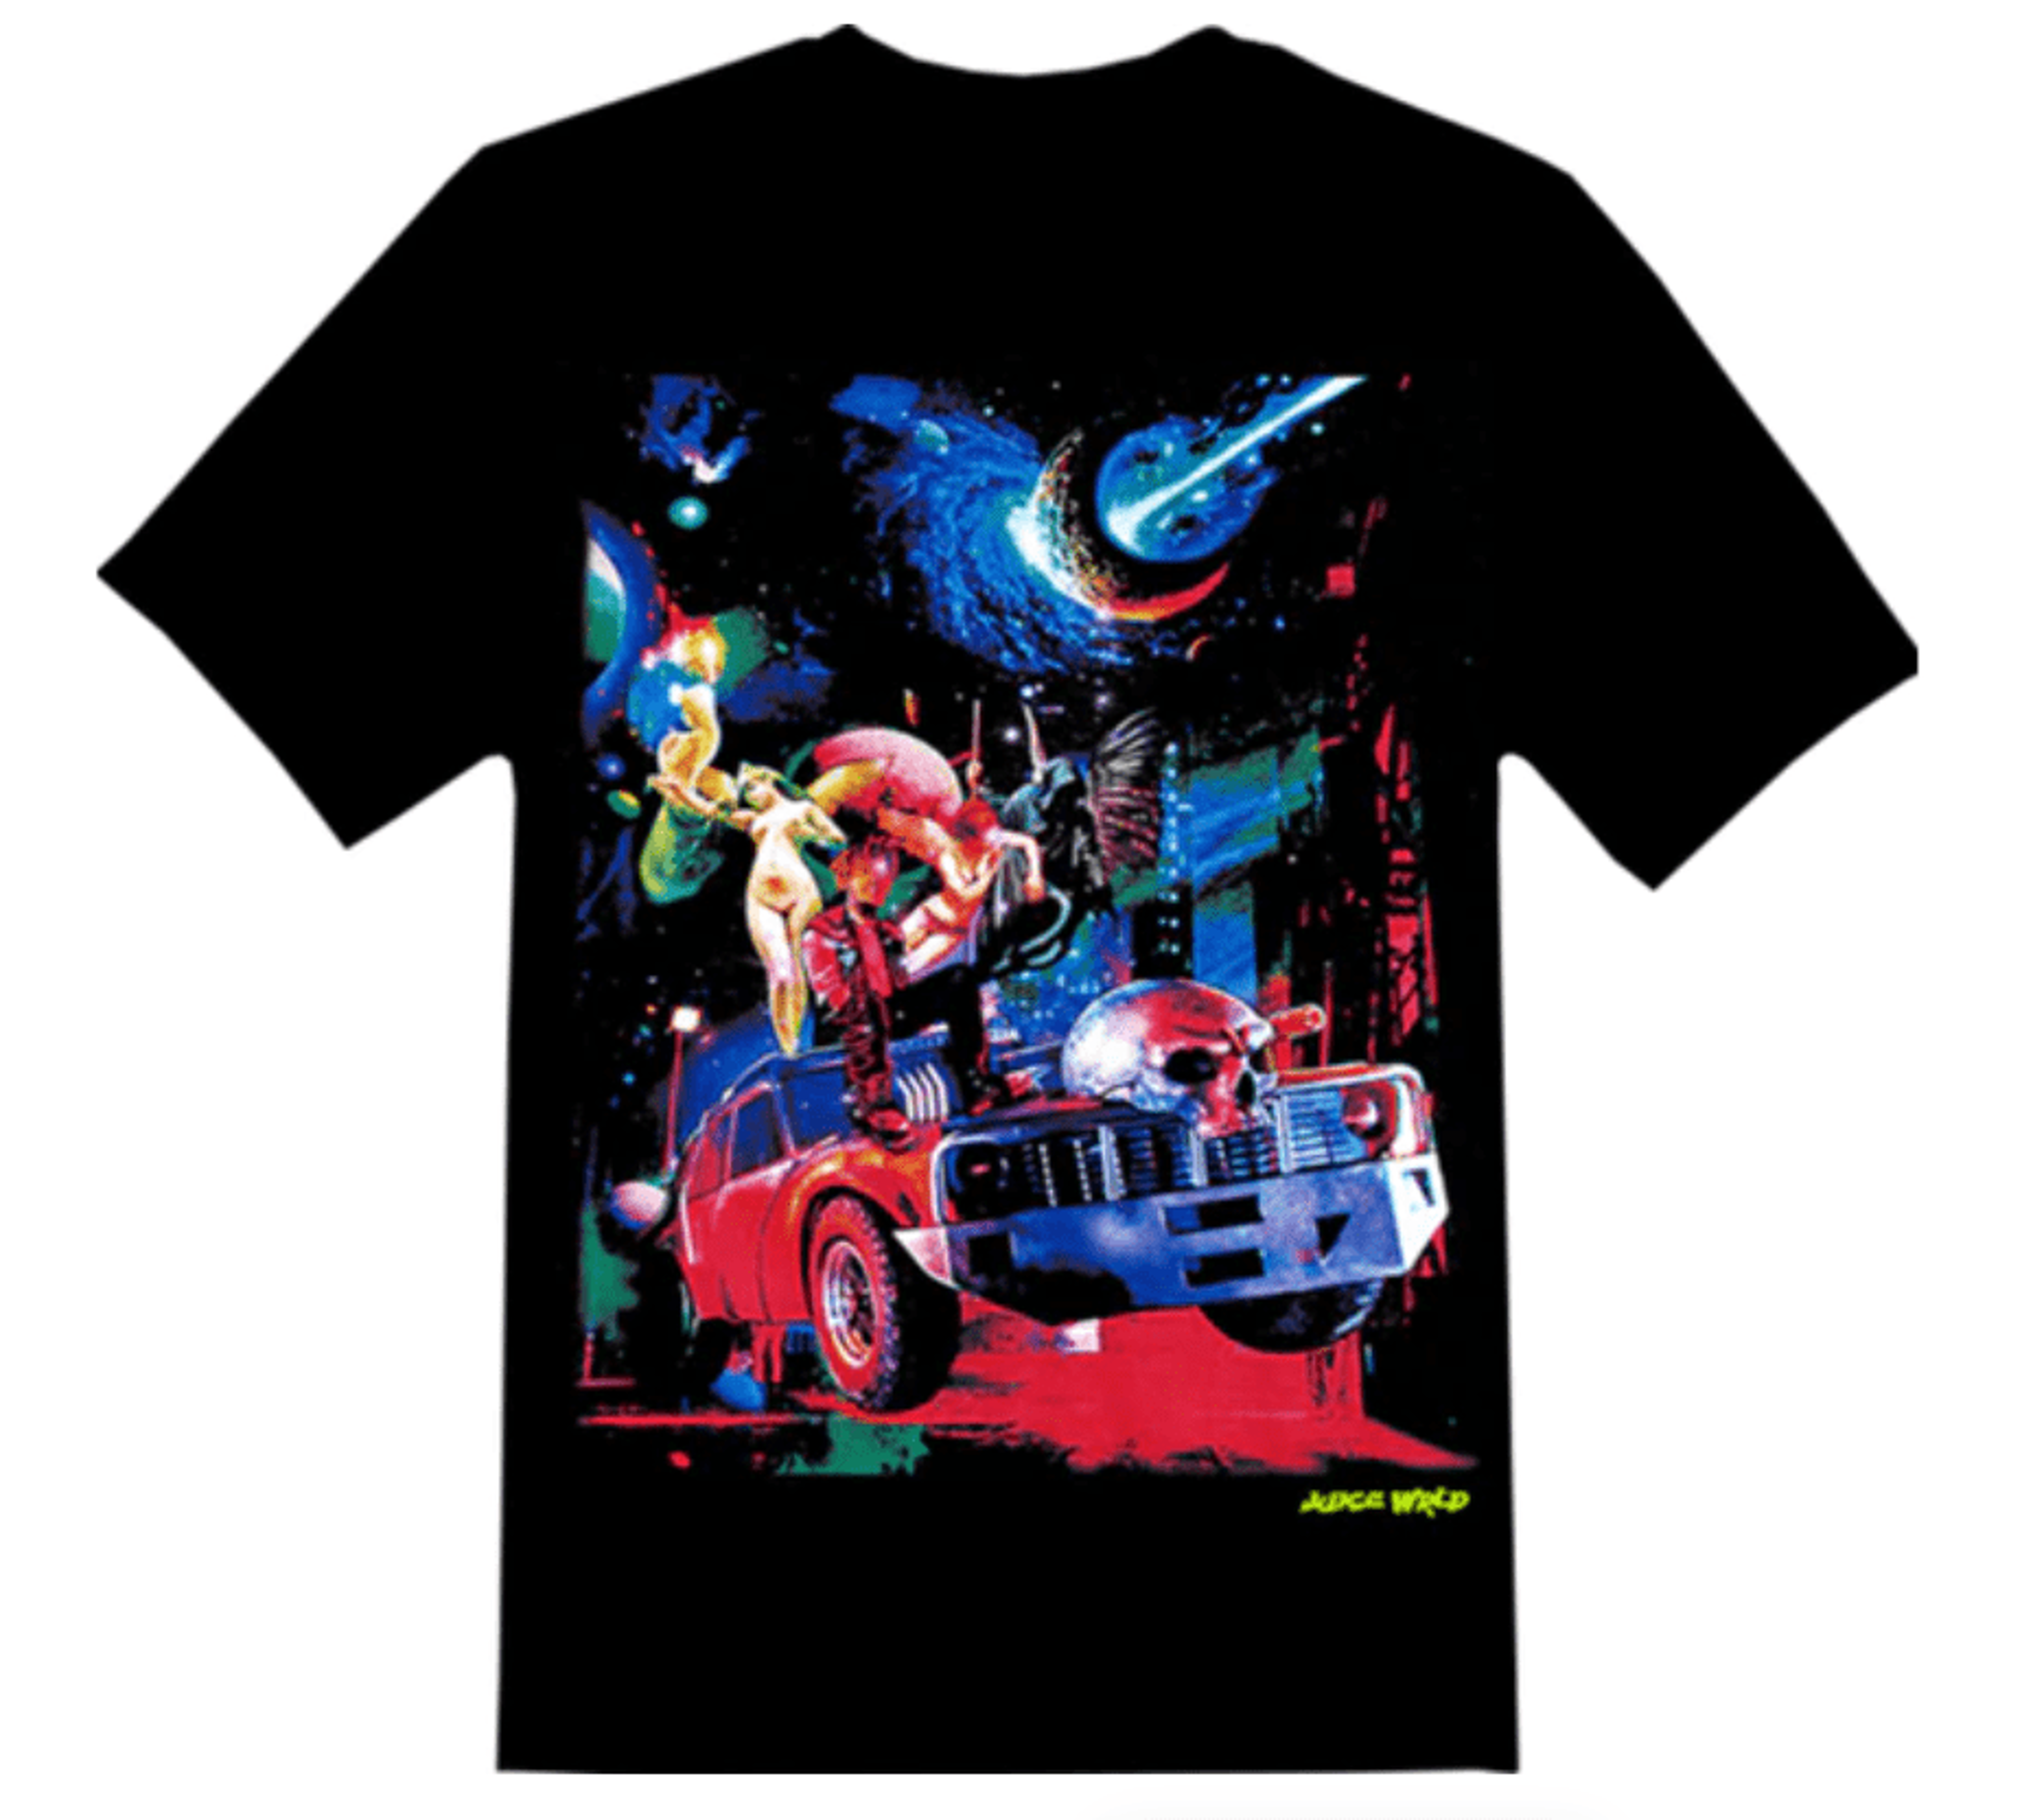 Vlone x Juice Wrld Cosmic Racer Short Sleeve Tee Shirt Black